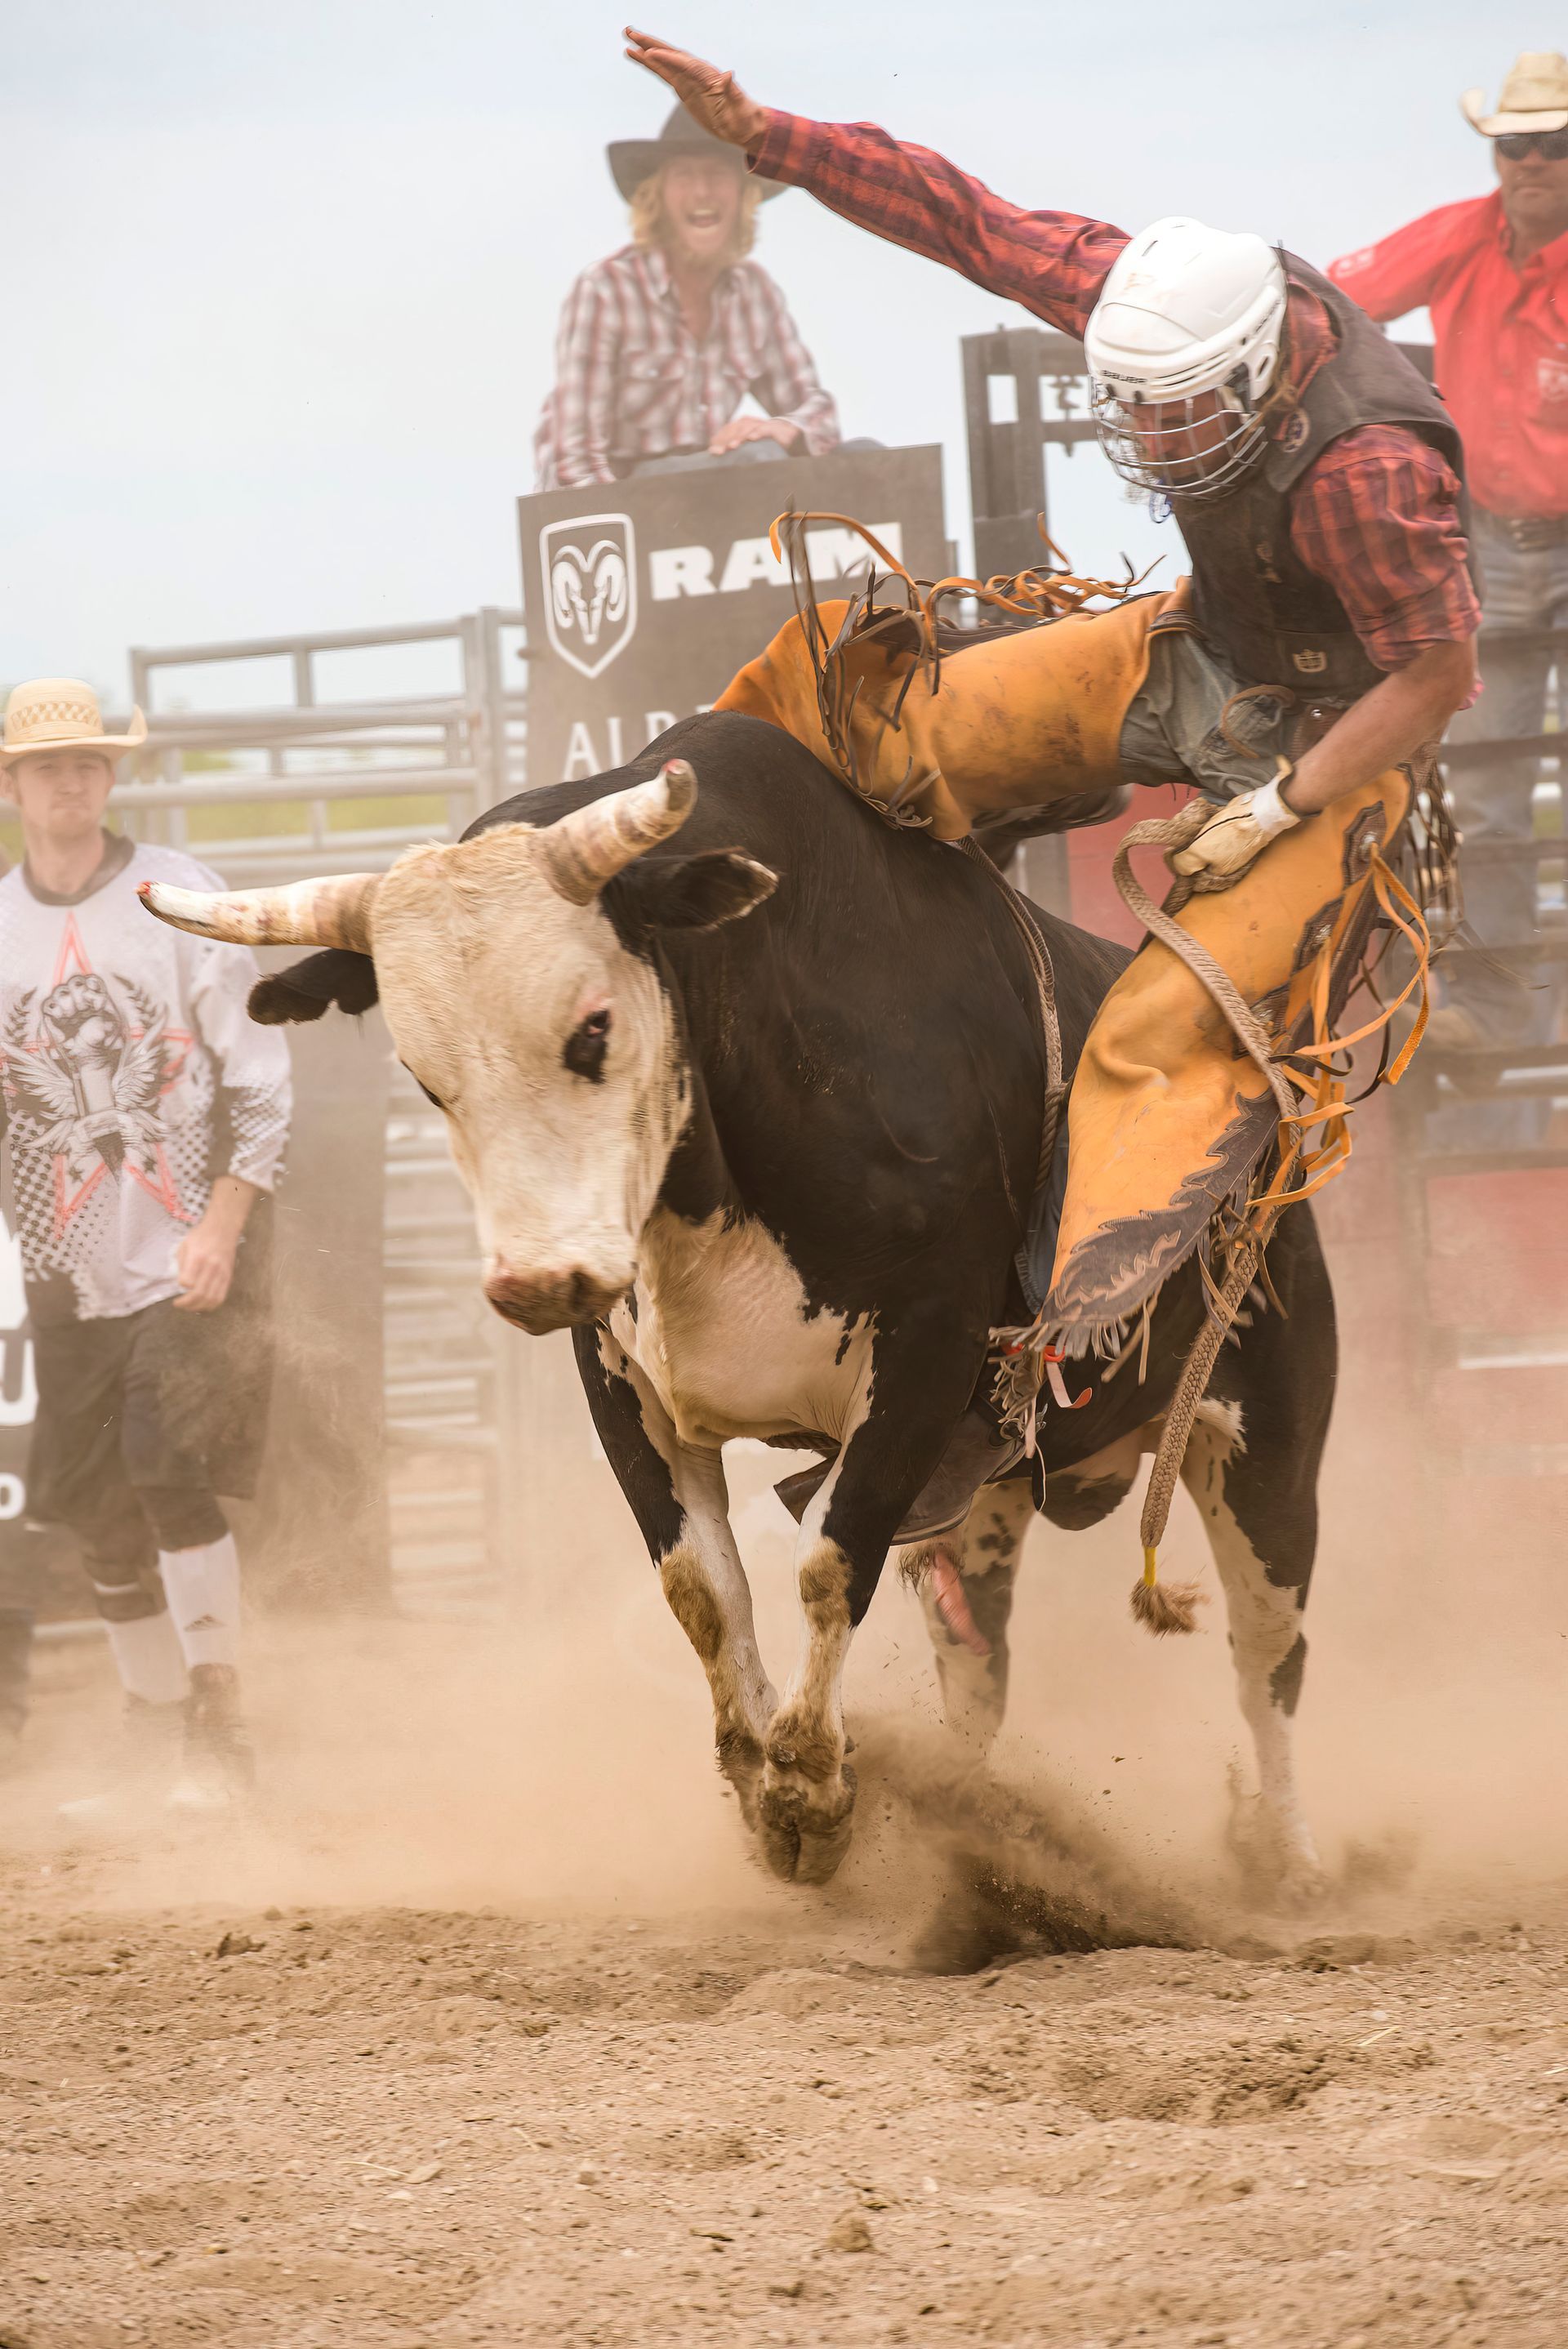 bull bucking off rider at rodeo